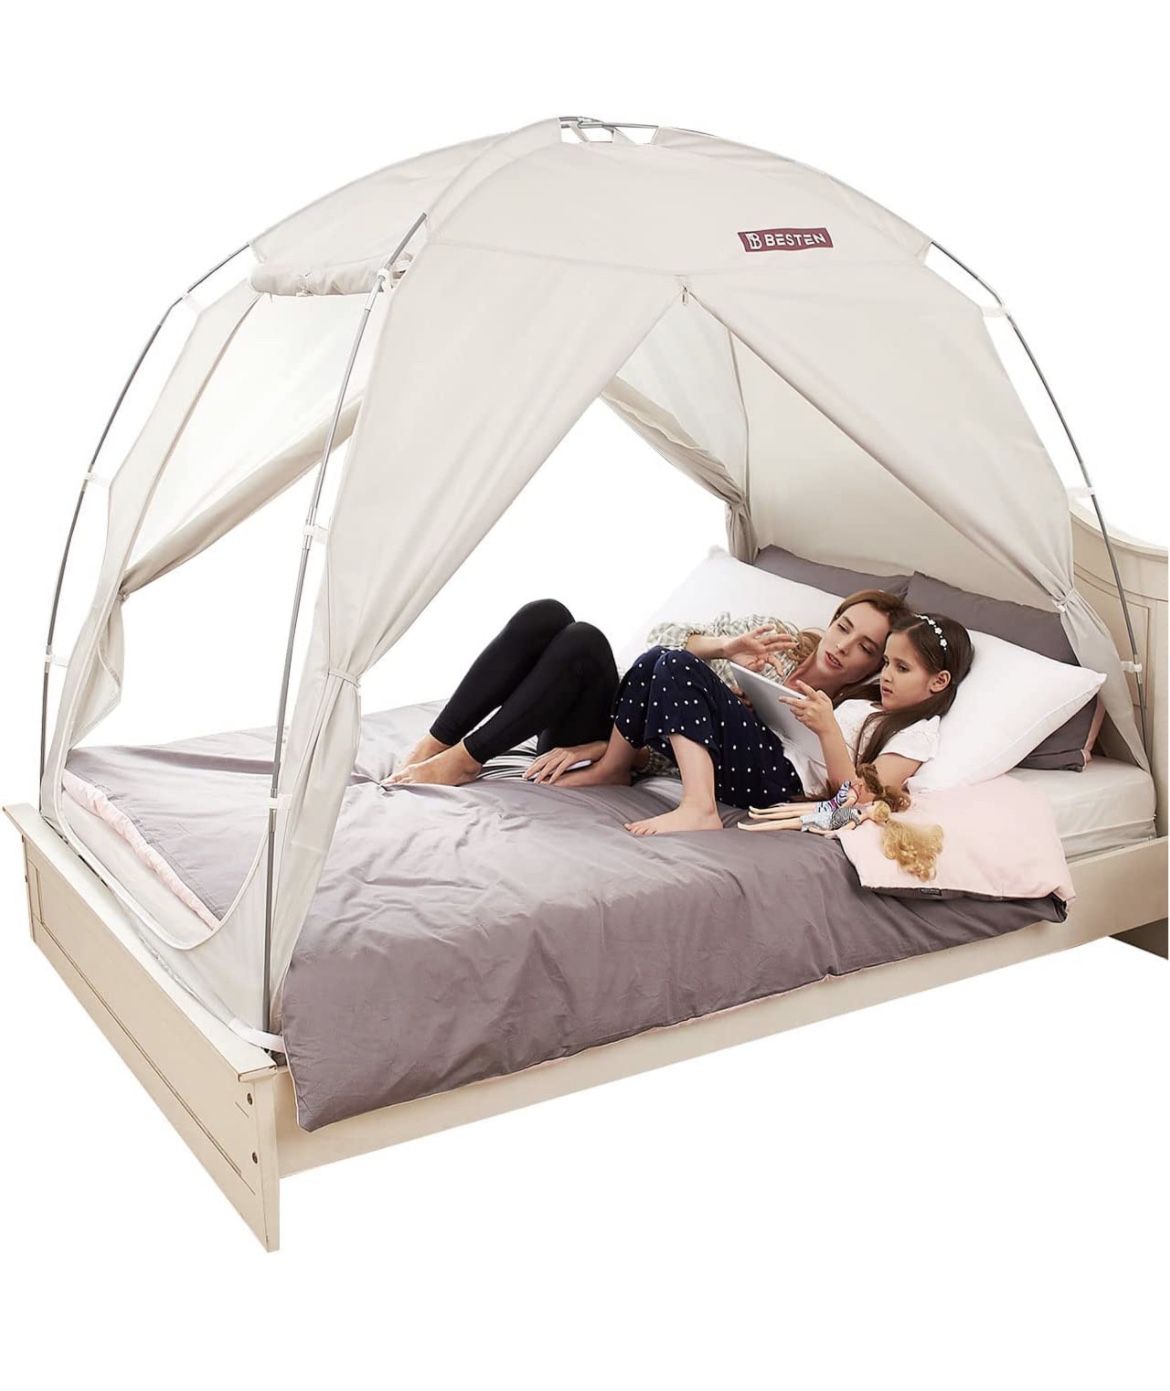 BESTEN Floorless Indoor Privacy Tent on Bed with Color Poles for Cozy Sleep in Drafty Rooms (Full/Queen, Gray)